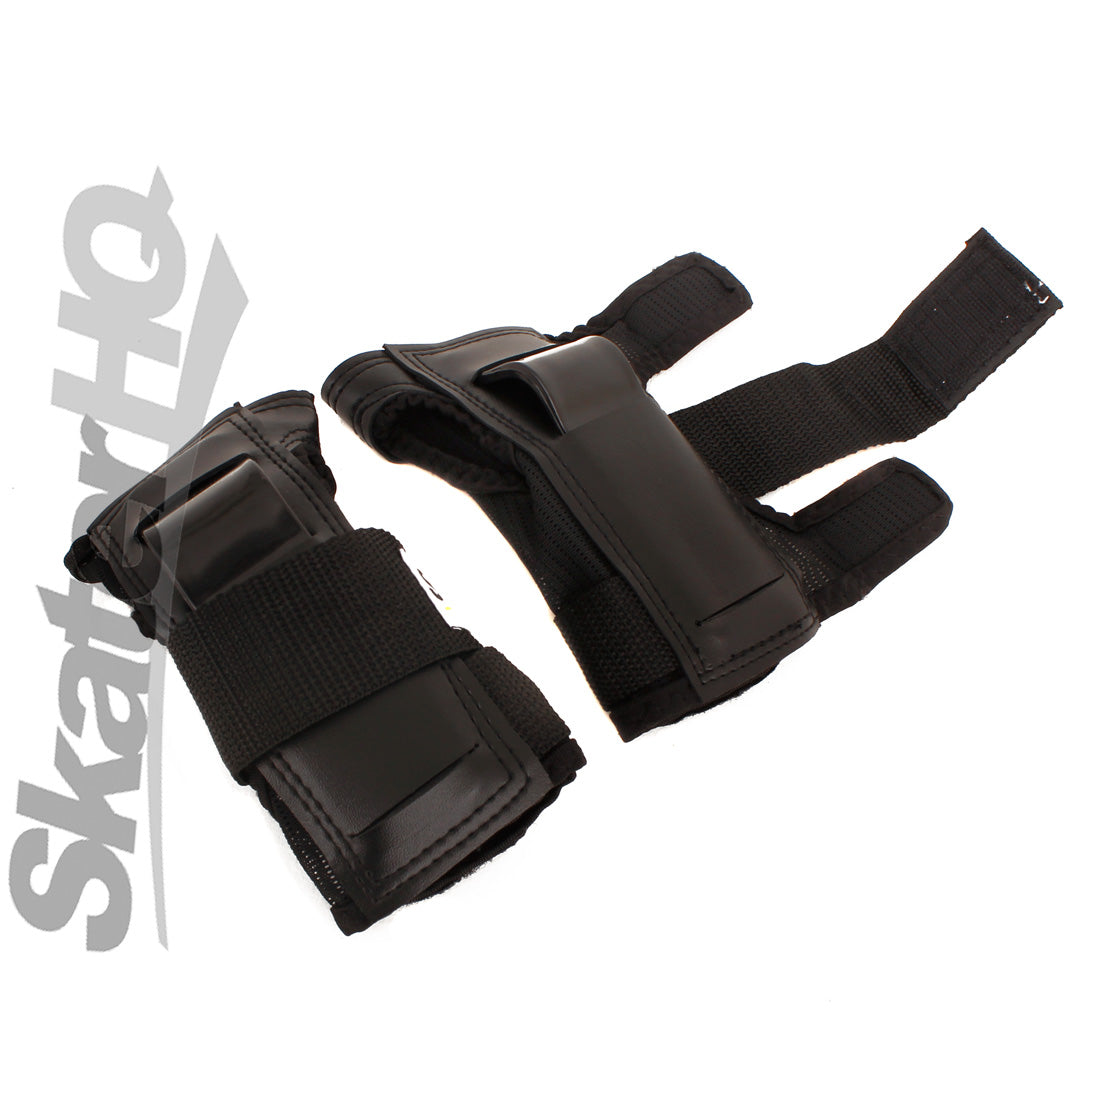 Skater HQ Tri Pack - Grommet Protective Gear